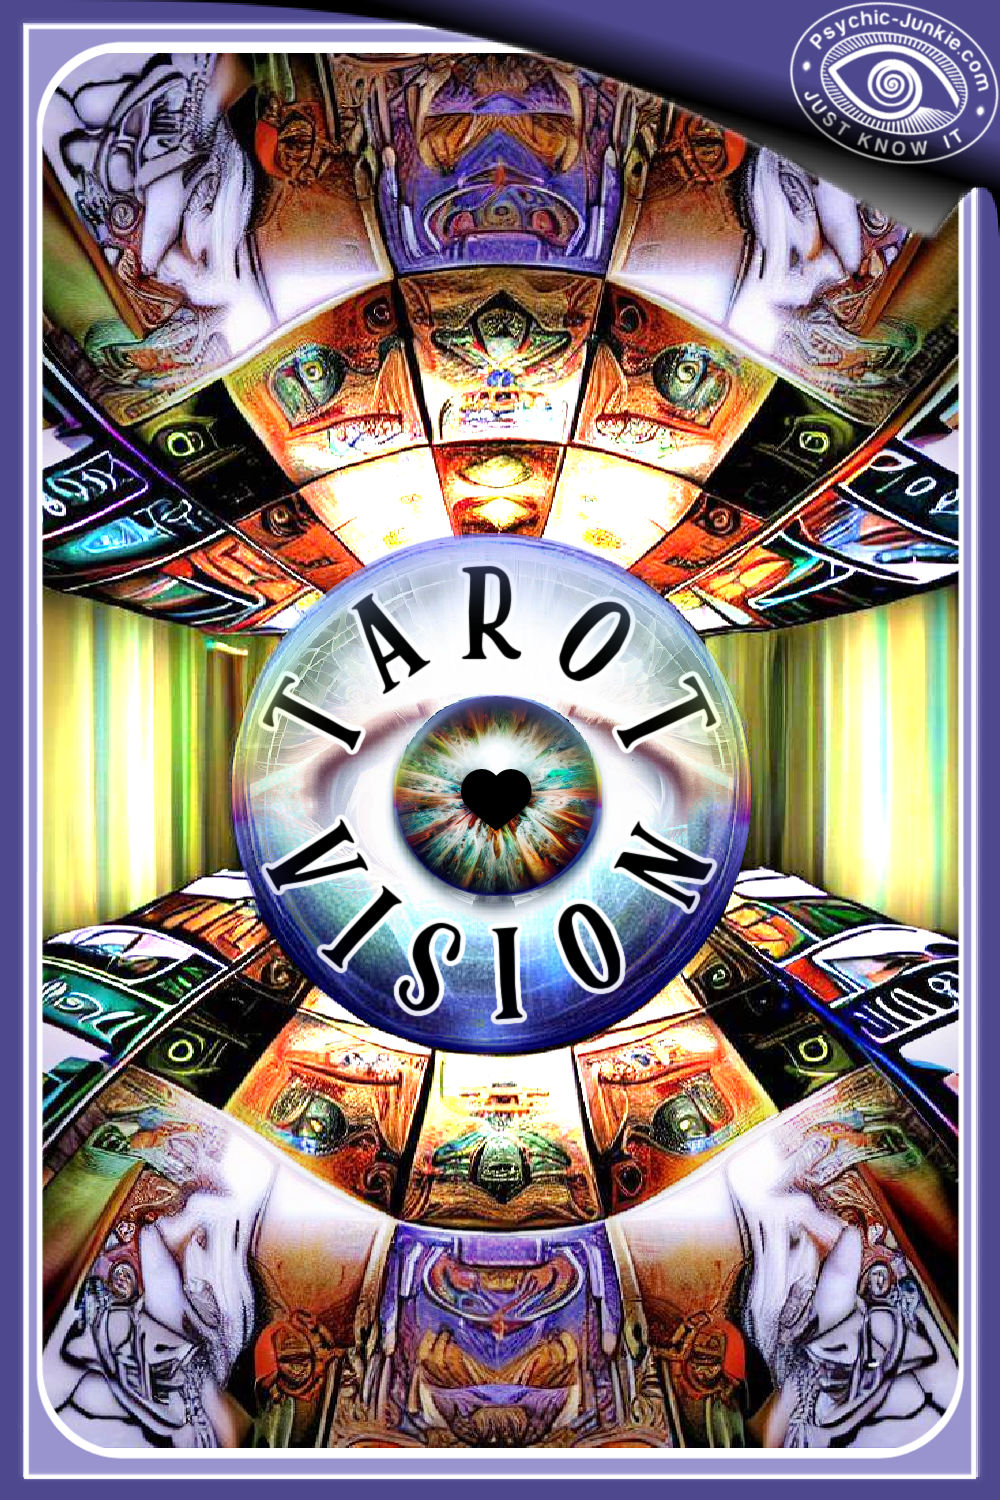 TarotVision = Clairvoyant Divination of the Tarot